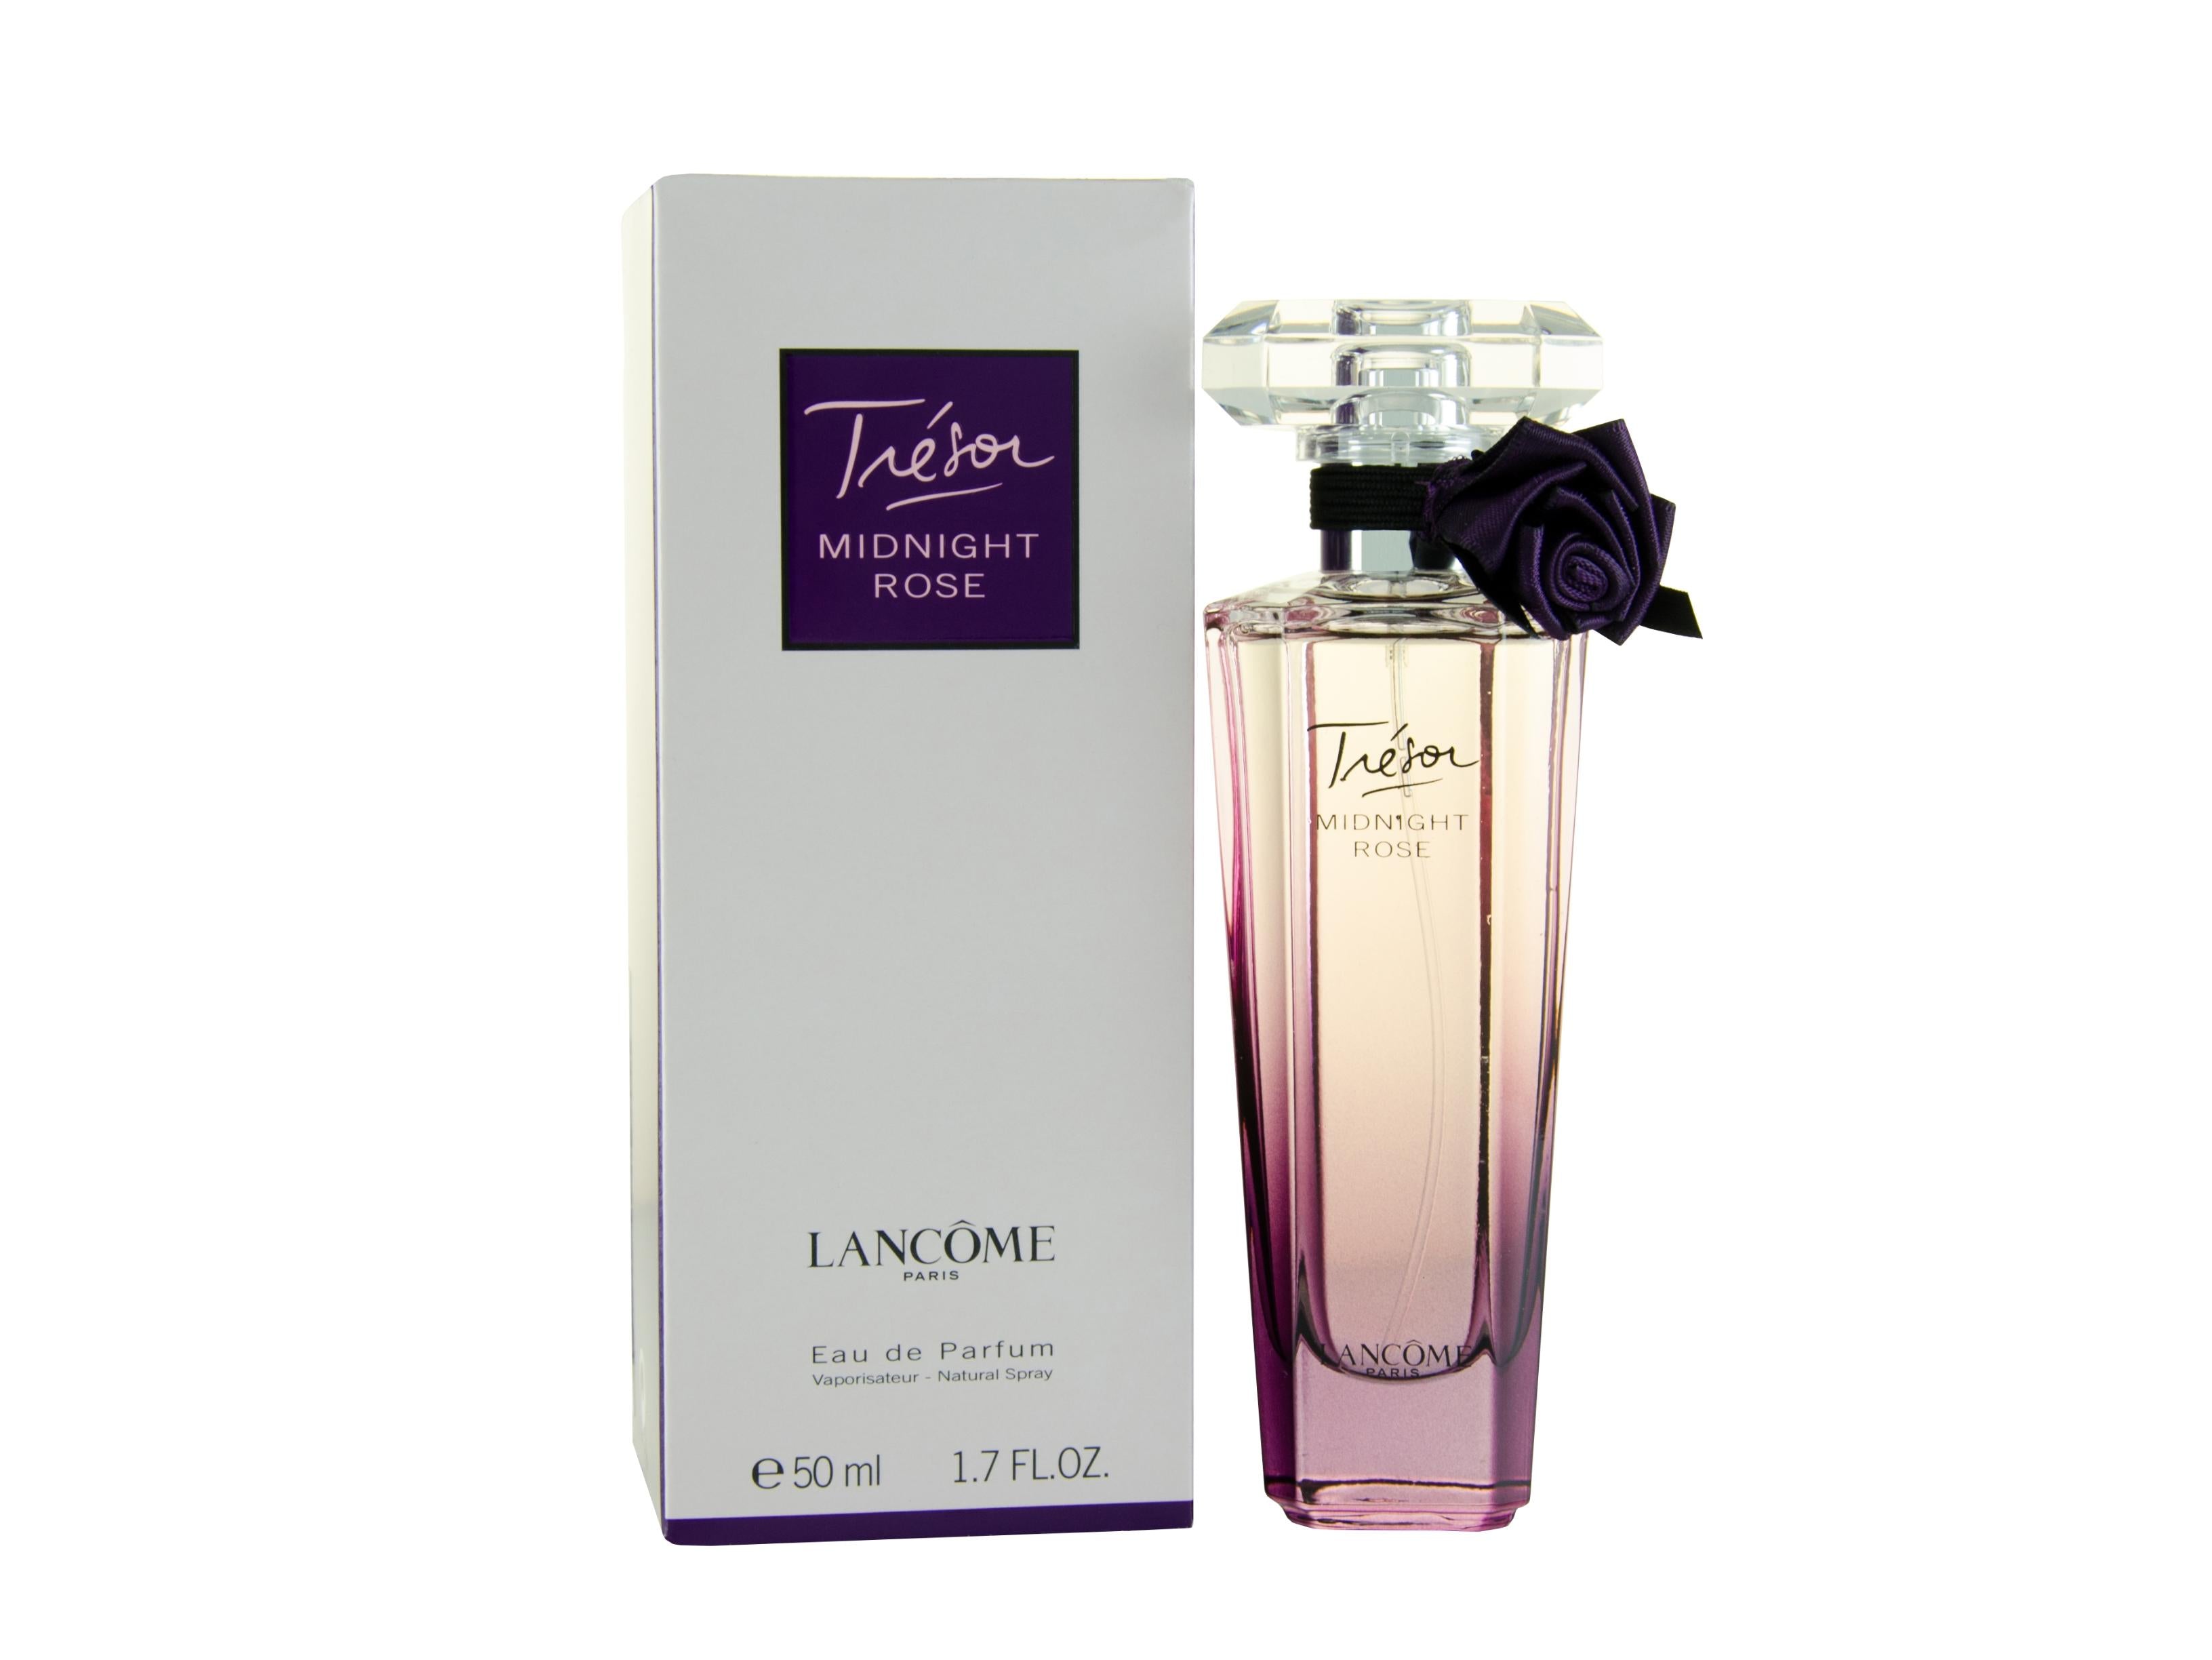 View Lancome Tresor Midnight Rose Eau de Parfum 50ml Spray information